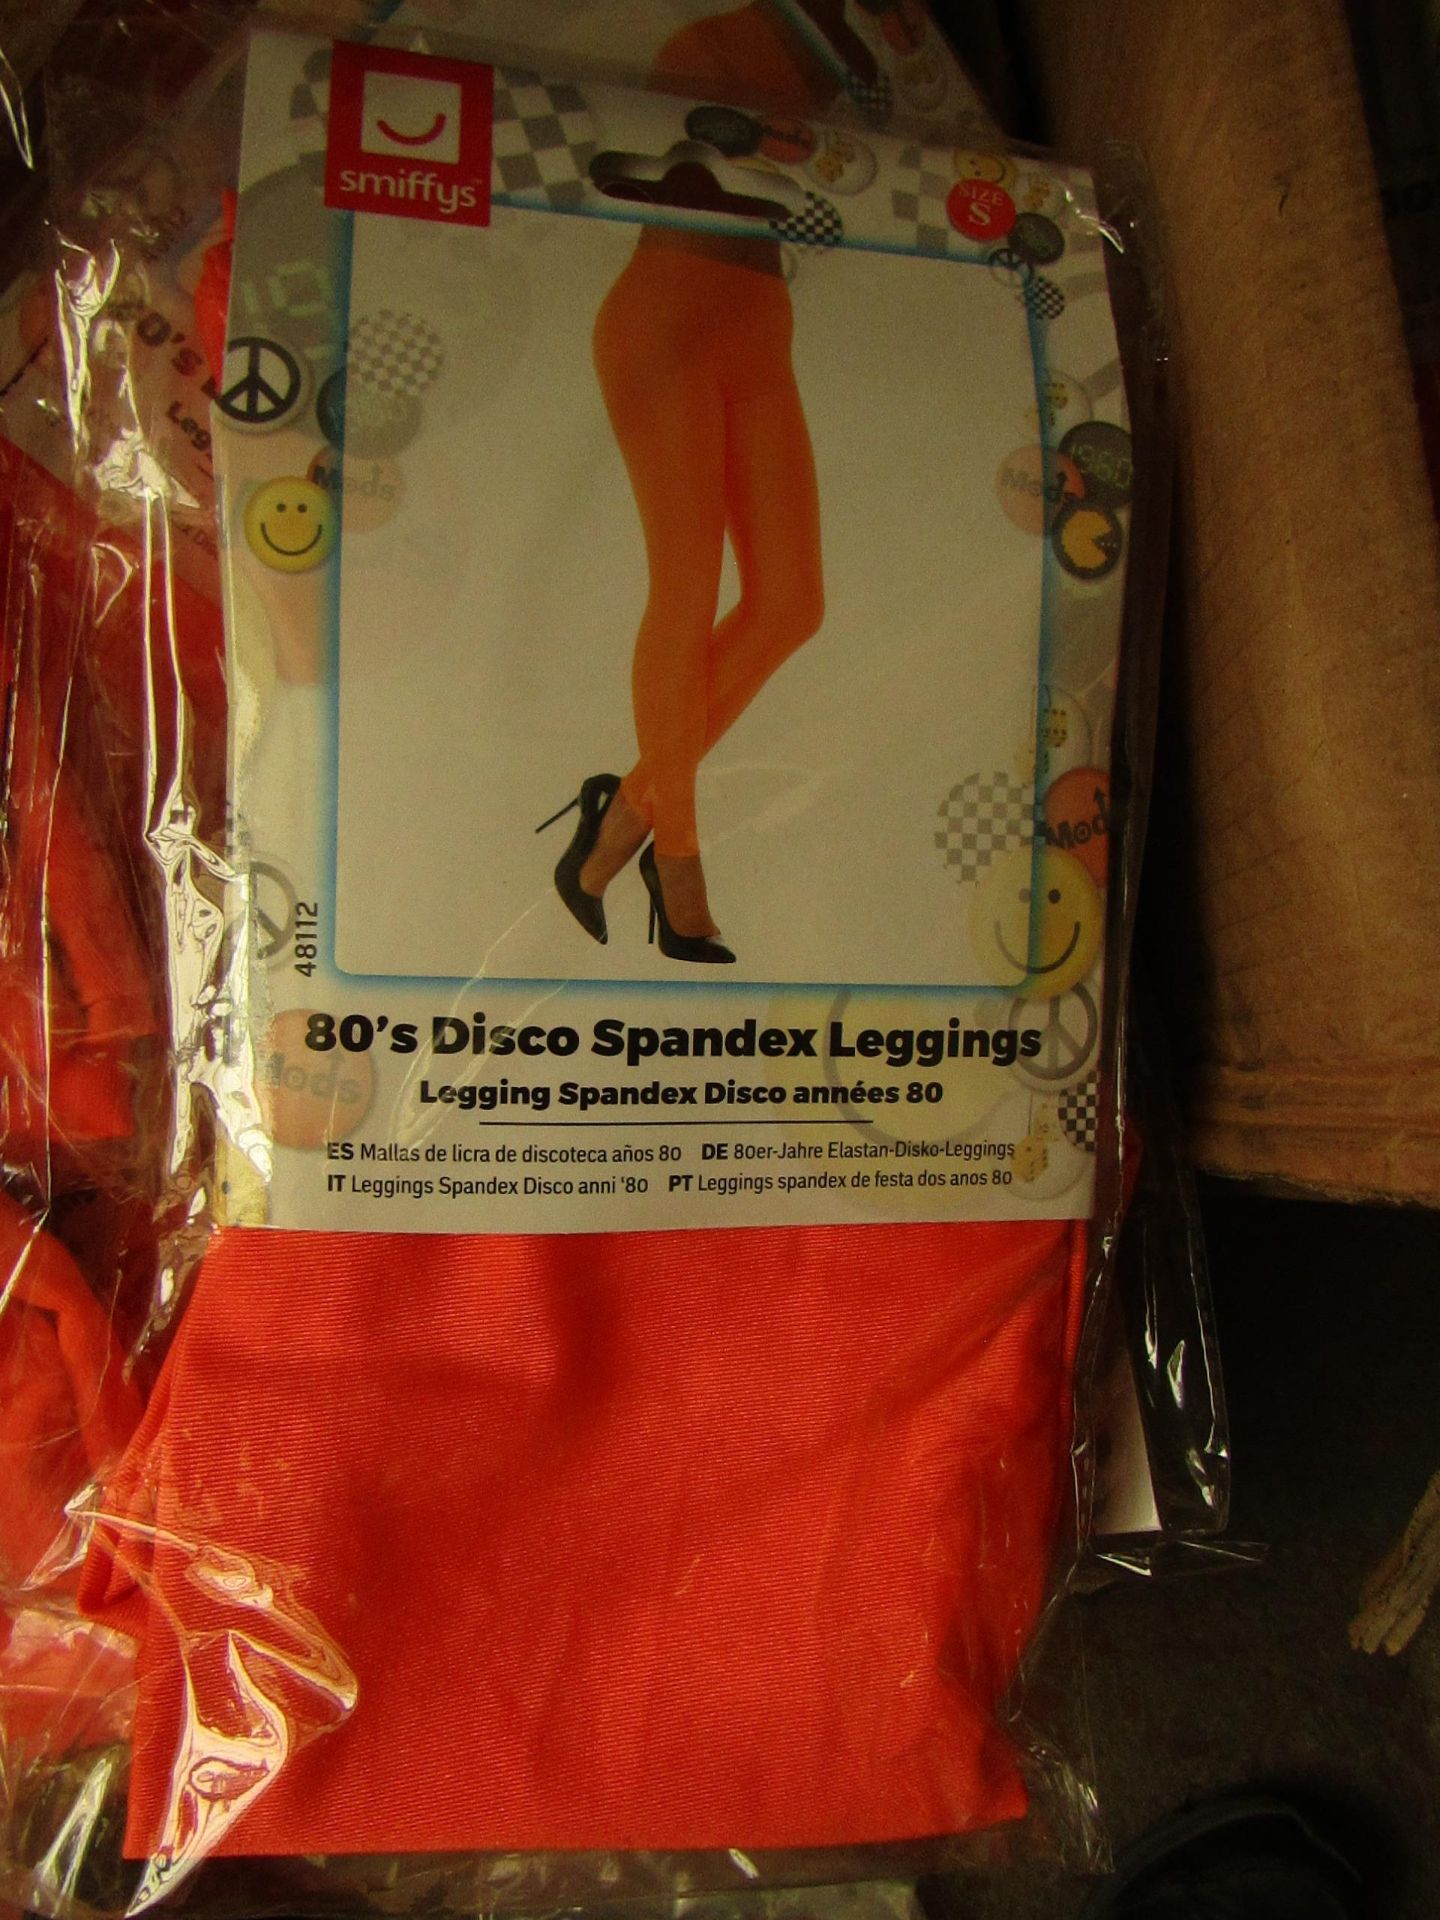 12x Pairs of Smiffys 80's Disco Spandex Leggings, new